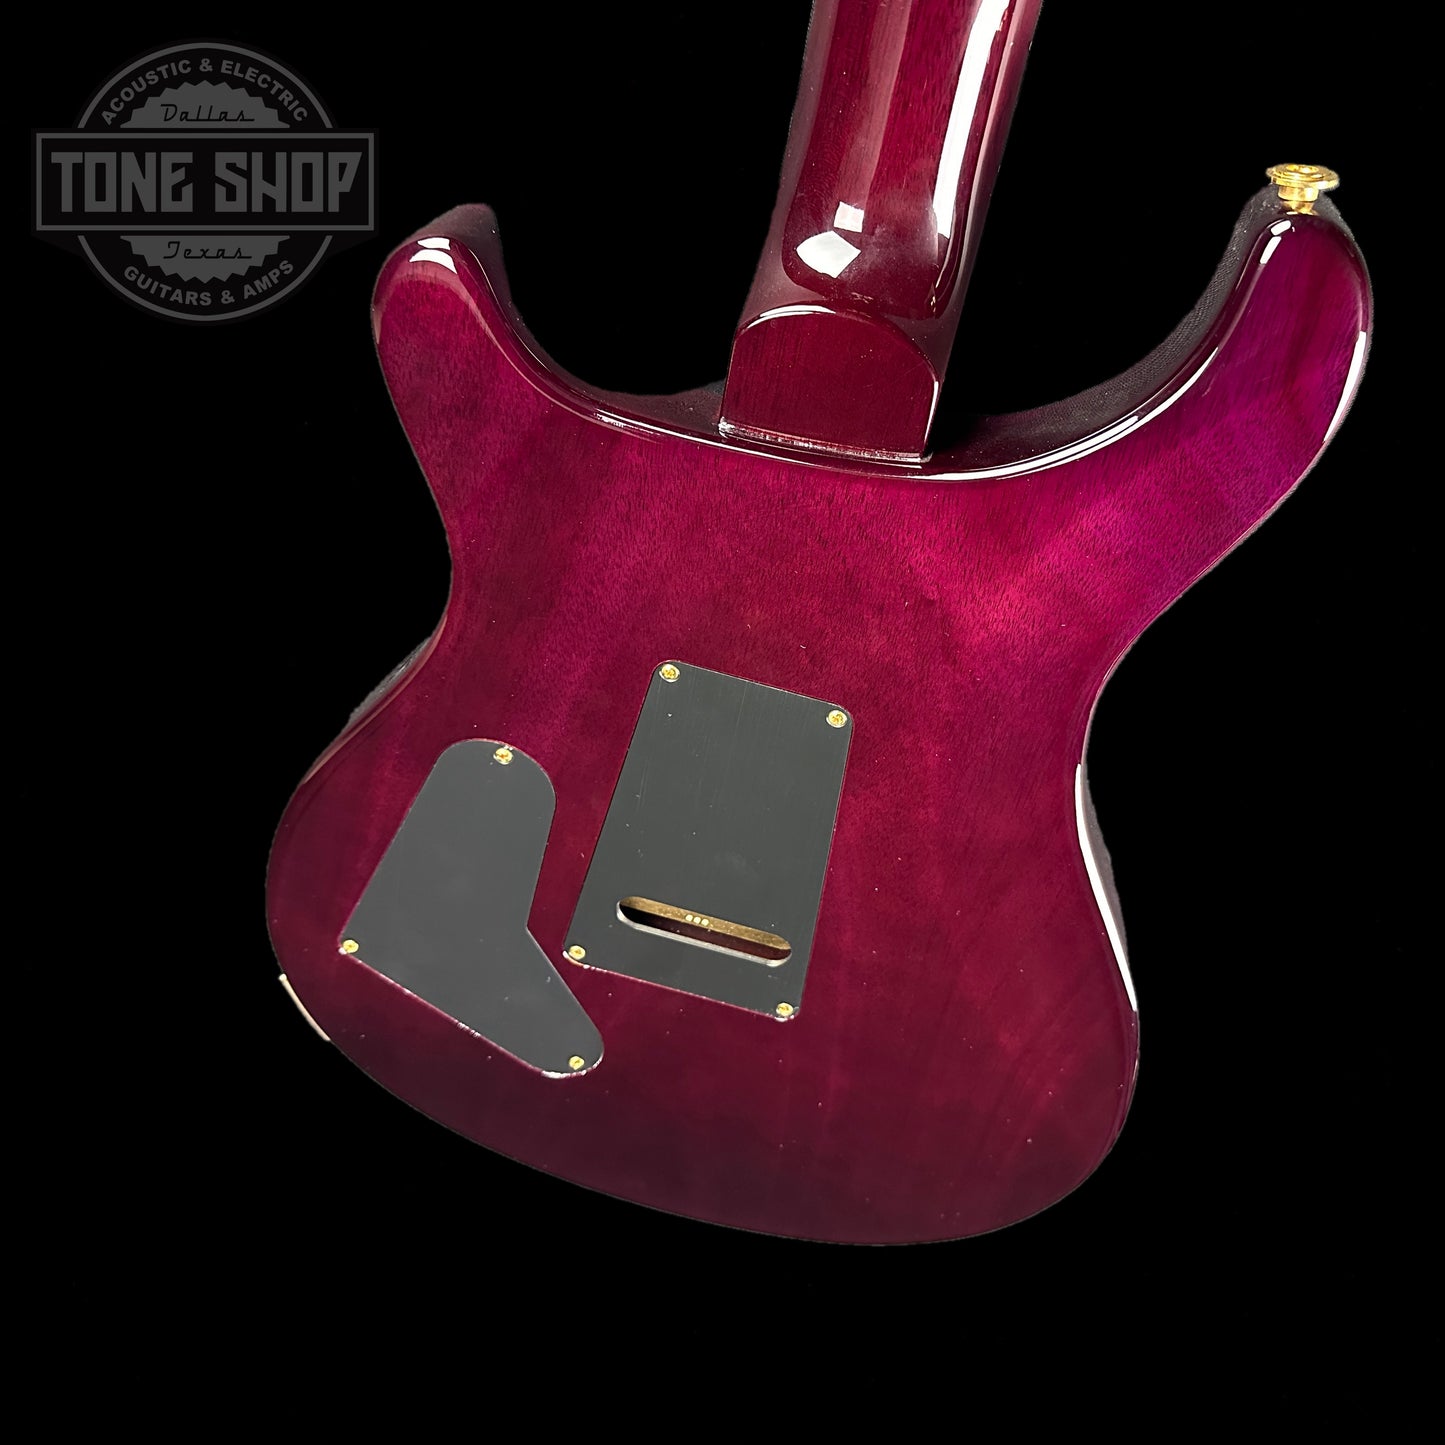 Back angle of Used PRS Paul's Guitar 35th Anniversary River Blue Smoke Burst.